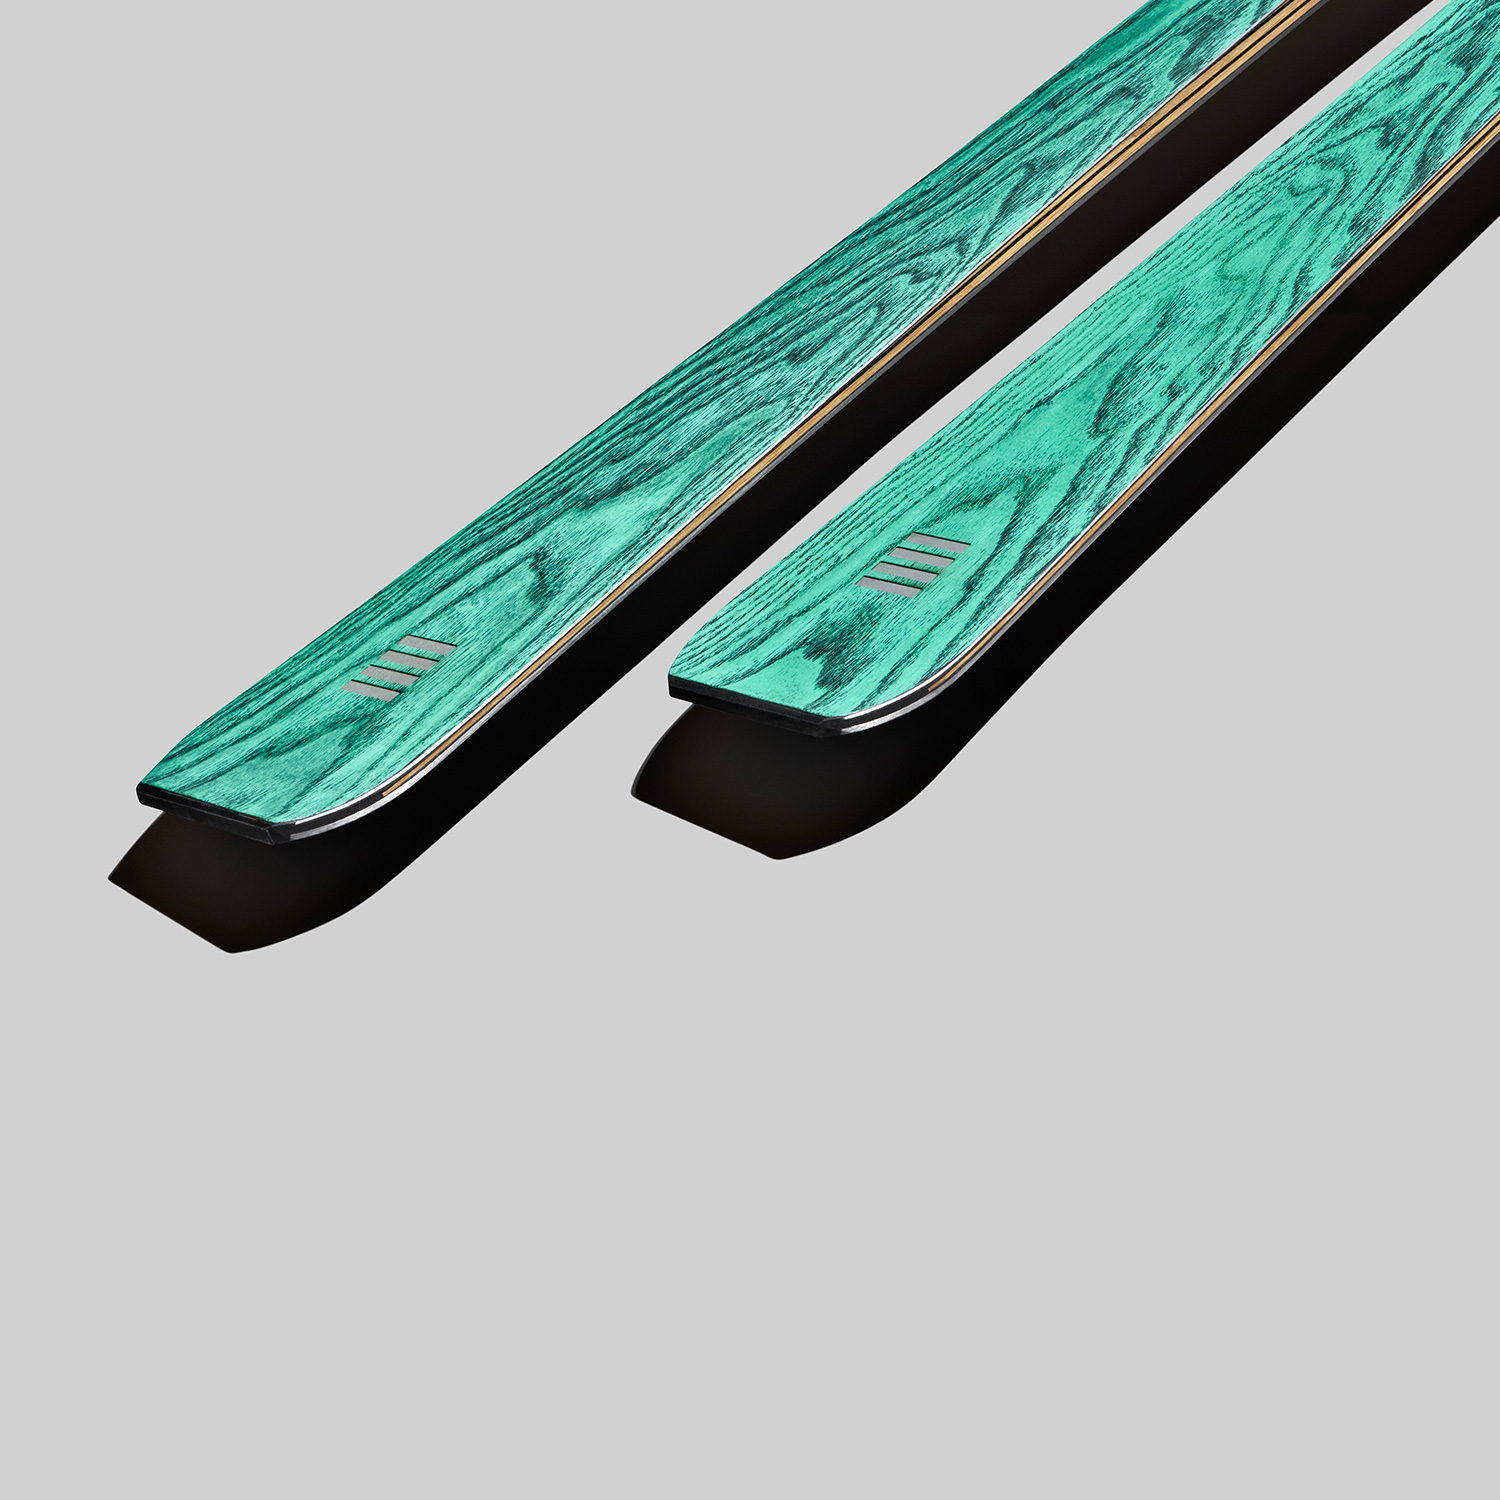 alpine race carve skis in green wood | art65evo | OperaSkis